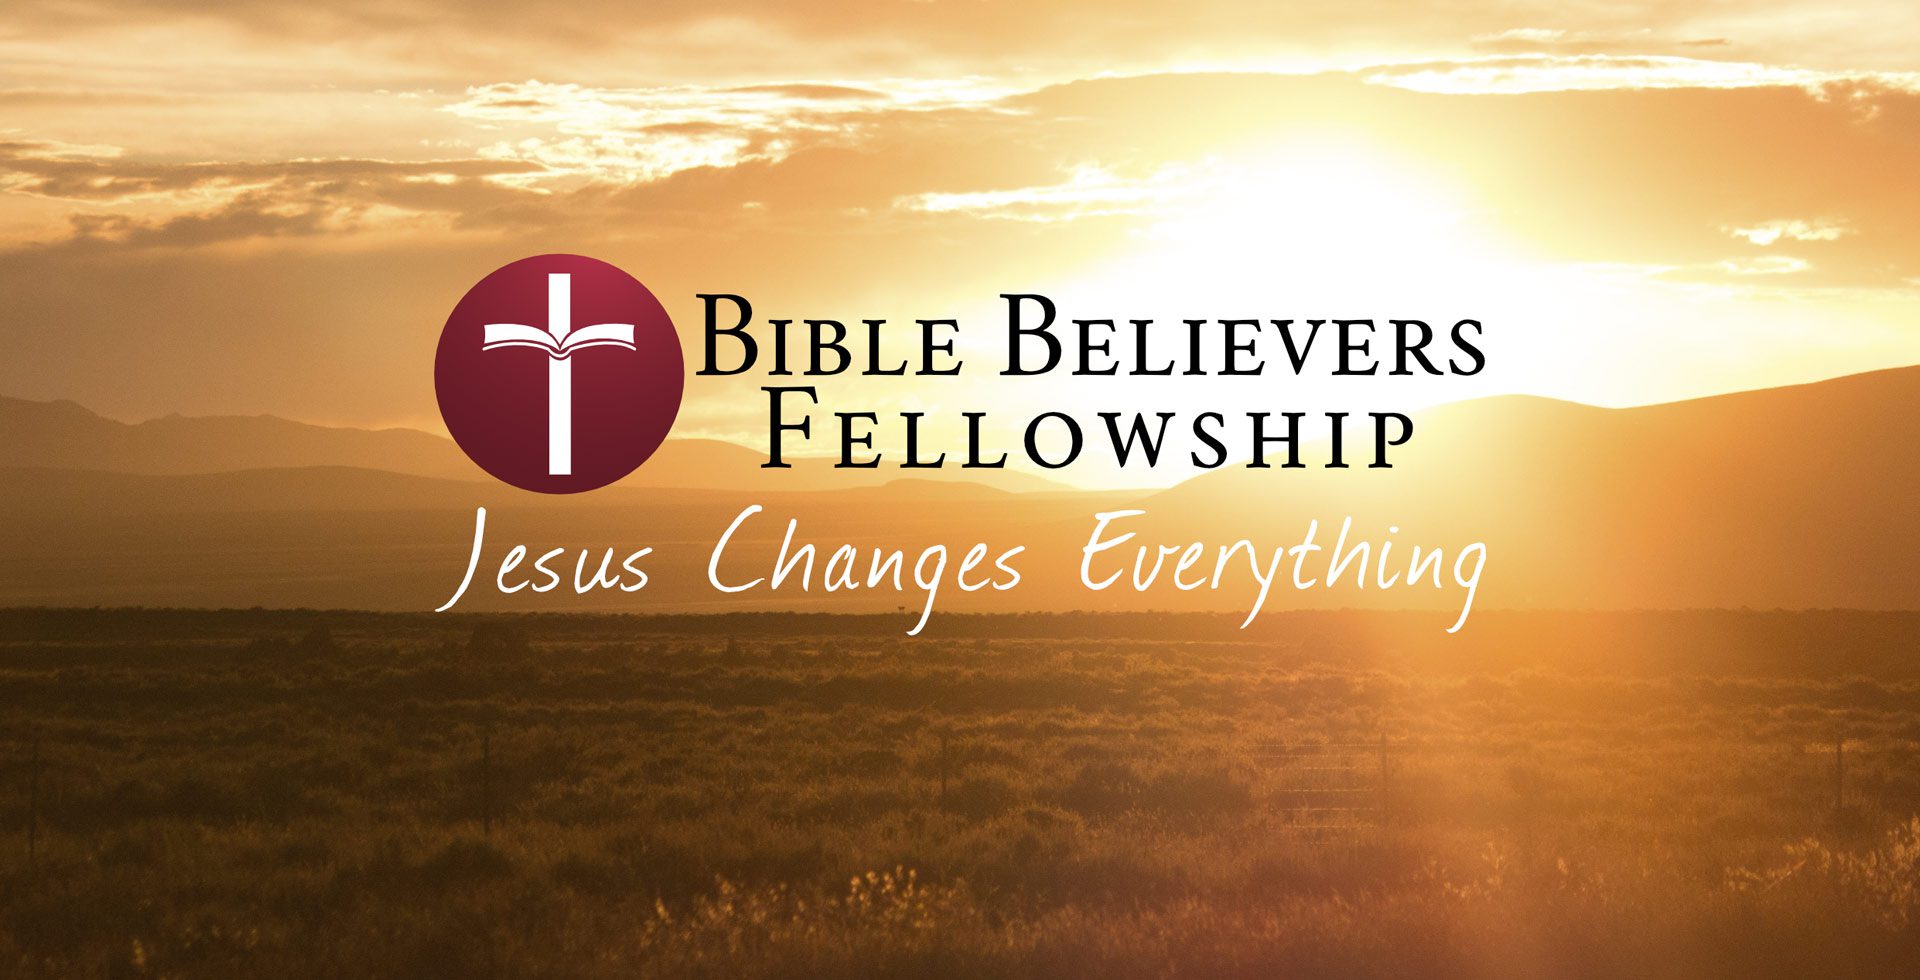 Bible Believers Fellowship